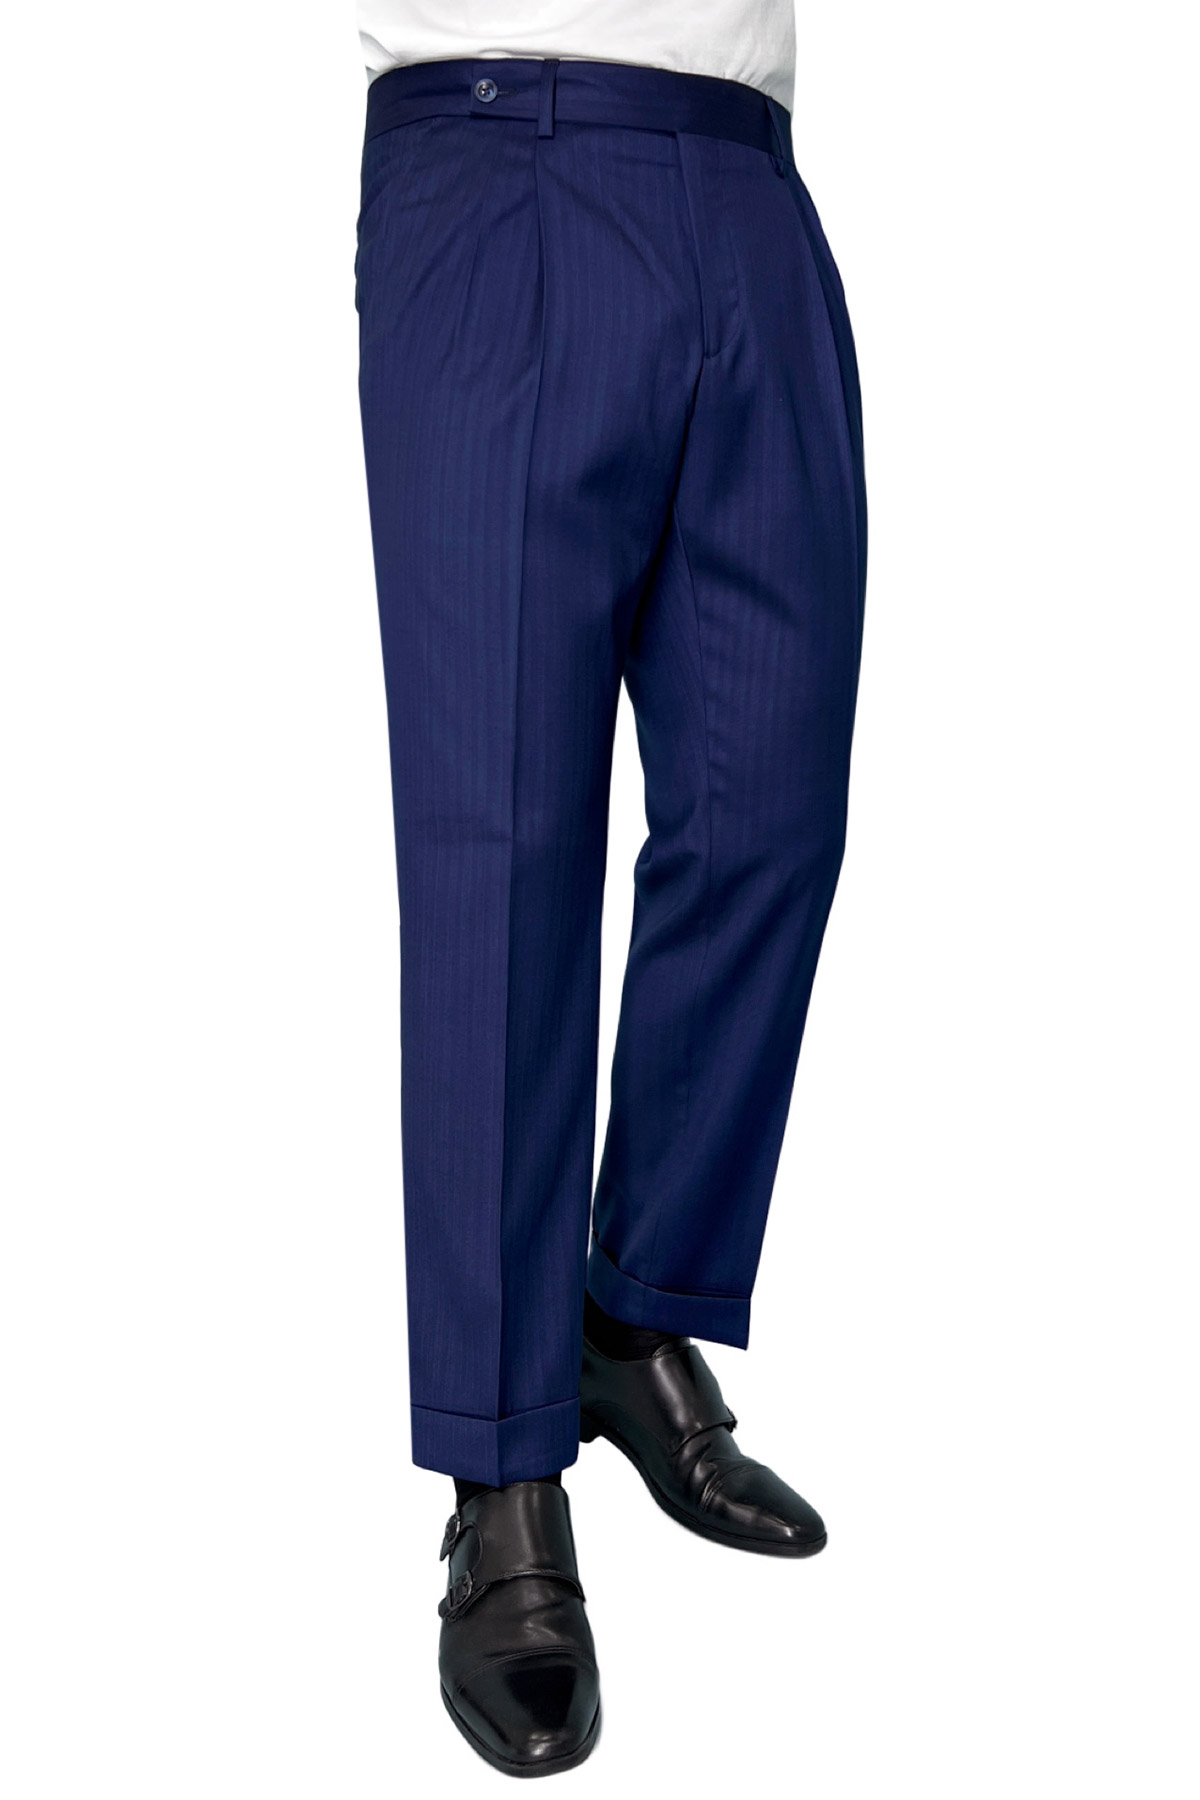 Pantalone uomo royal blu chiusura prolungata doppia pinces in fresco lana e seta Solaro Vitale Barberis Canonico